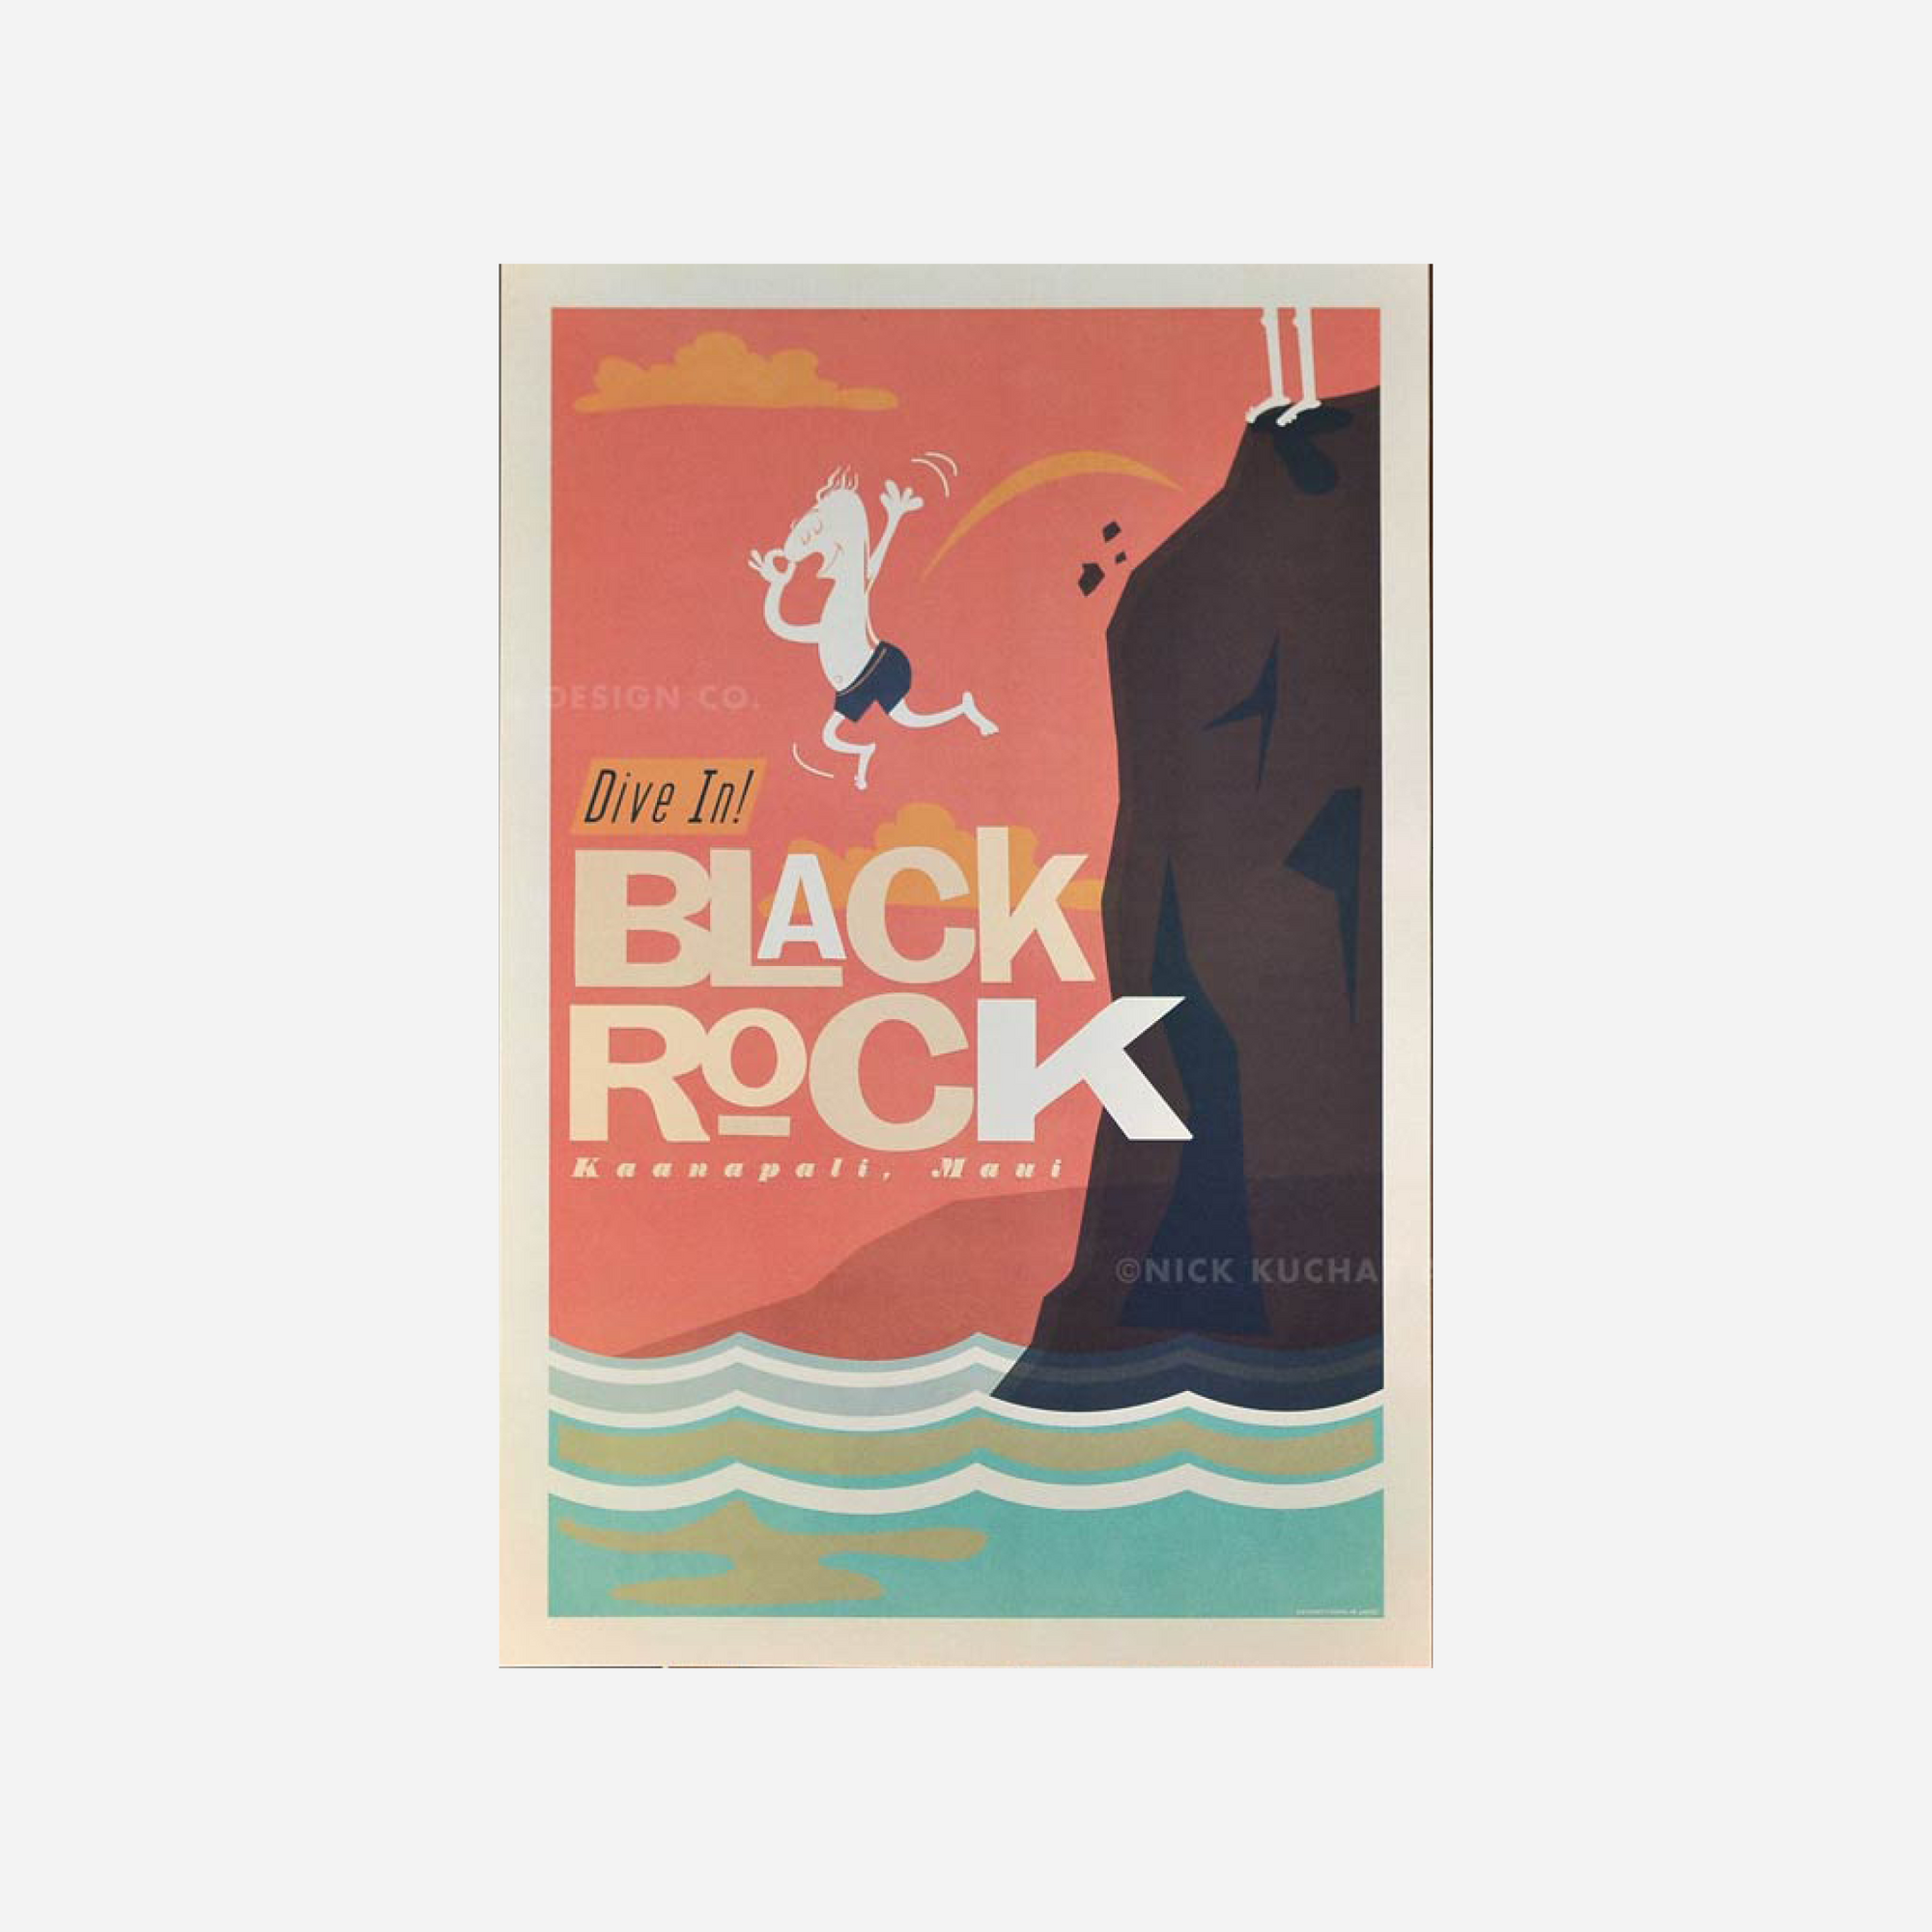 *Nick Kuchar Travel Poster - Black Rock